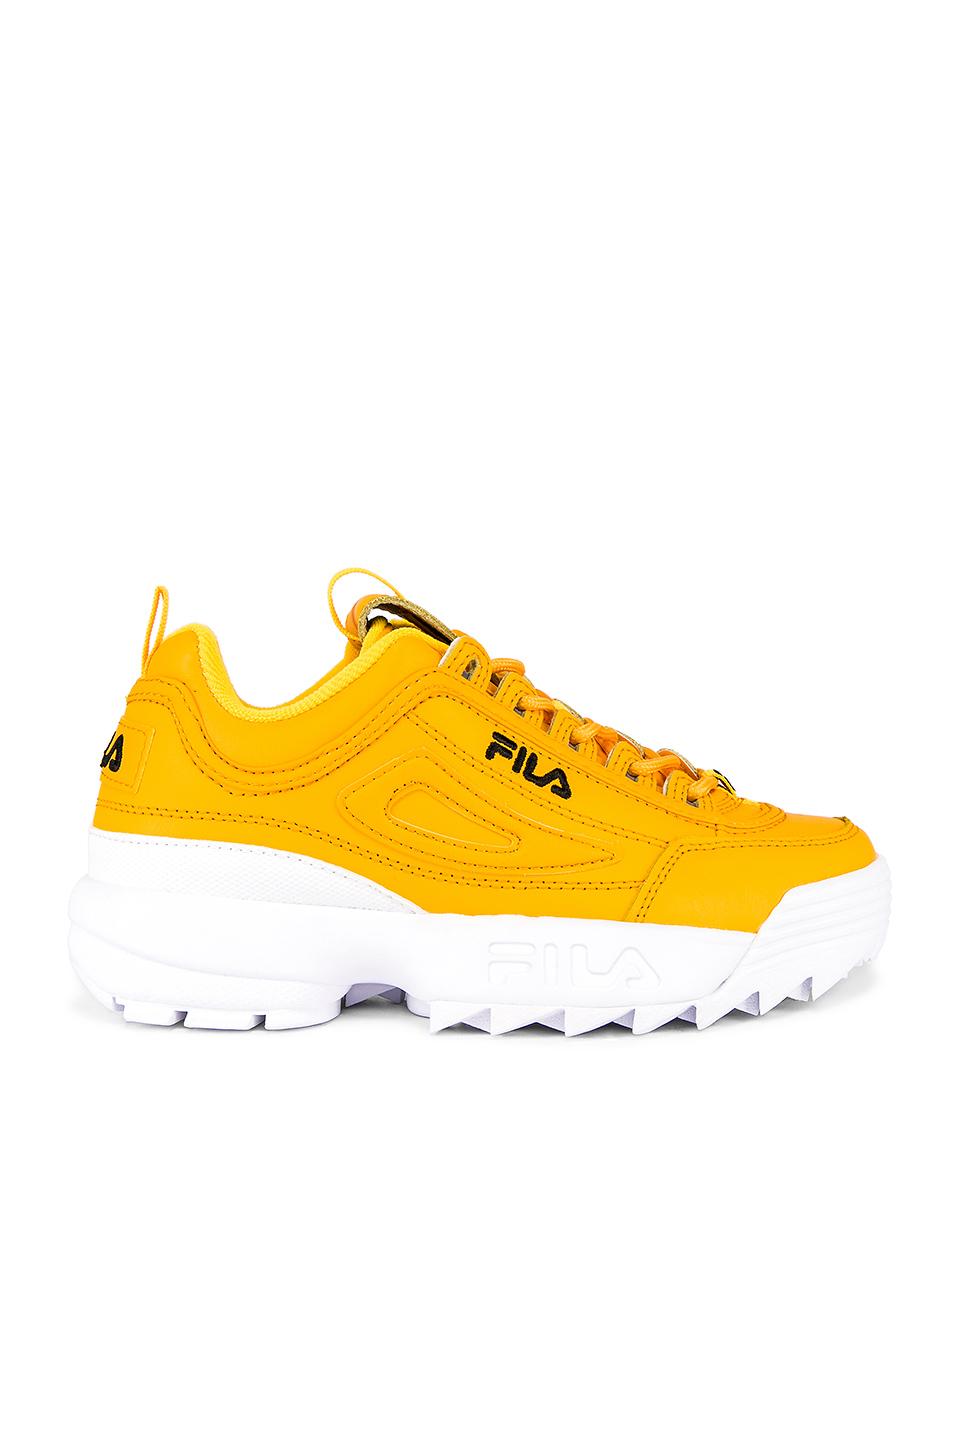 Fila Disruptor Ii Premium Sneaker in Gold Black & White (Yellow) | Lyst